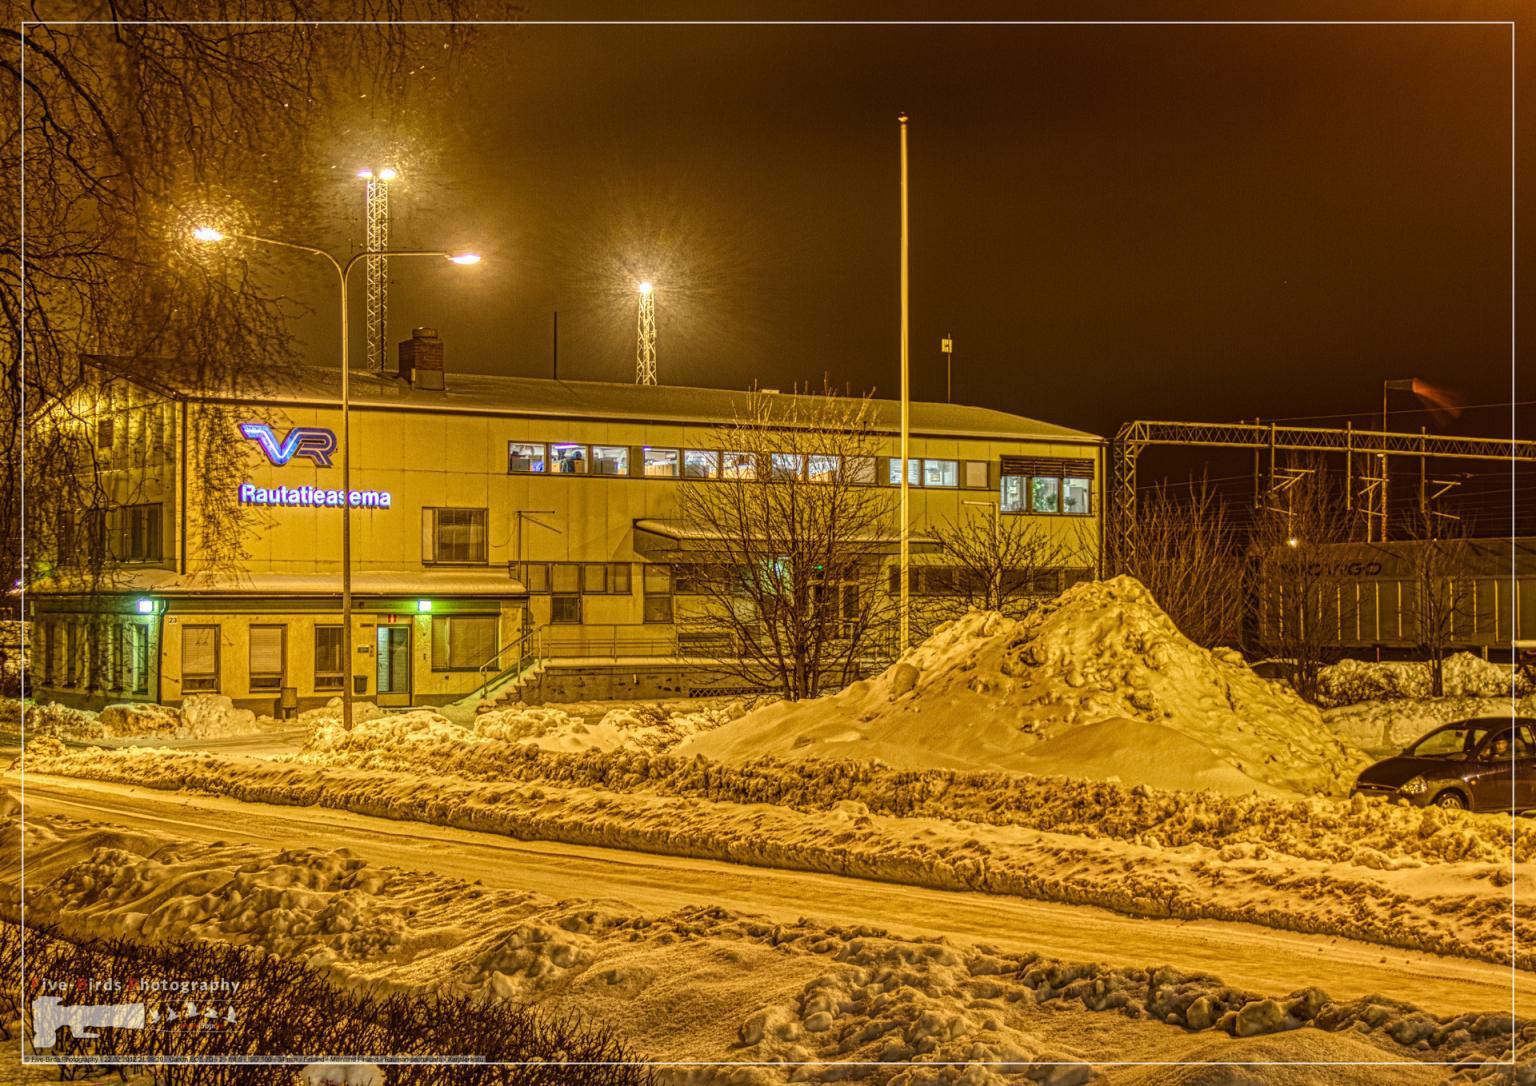 Night shot of a freight train station in Rauma, Finland